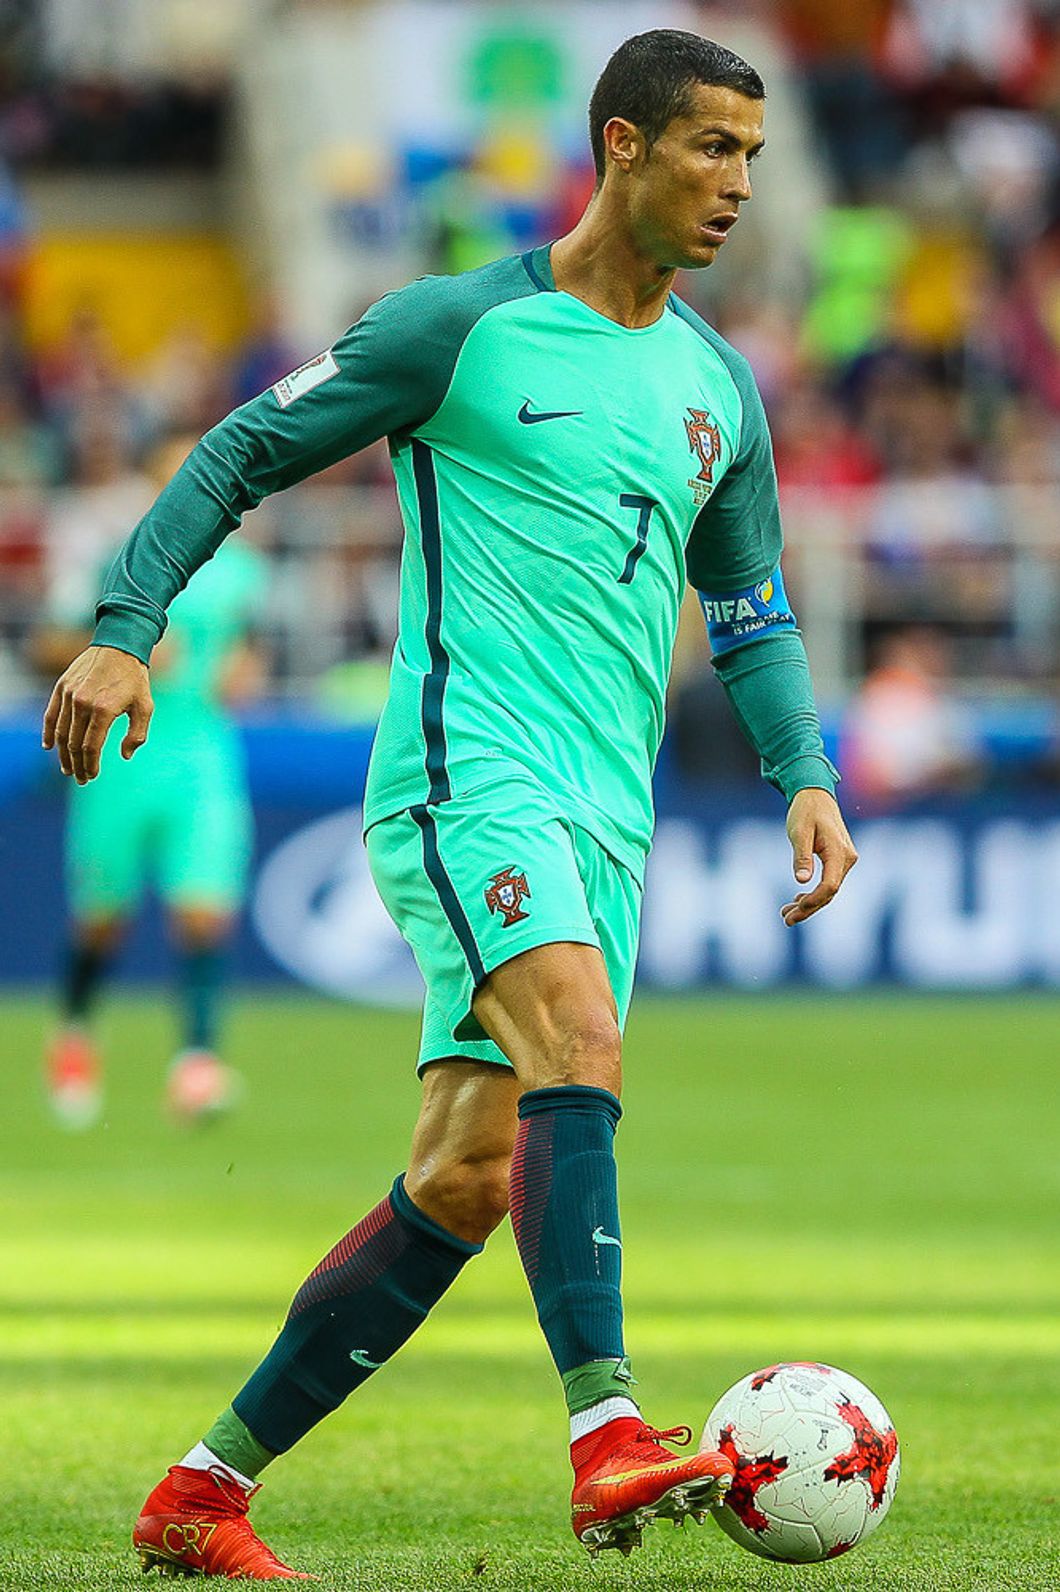 The Ronaldo Effect